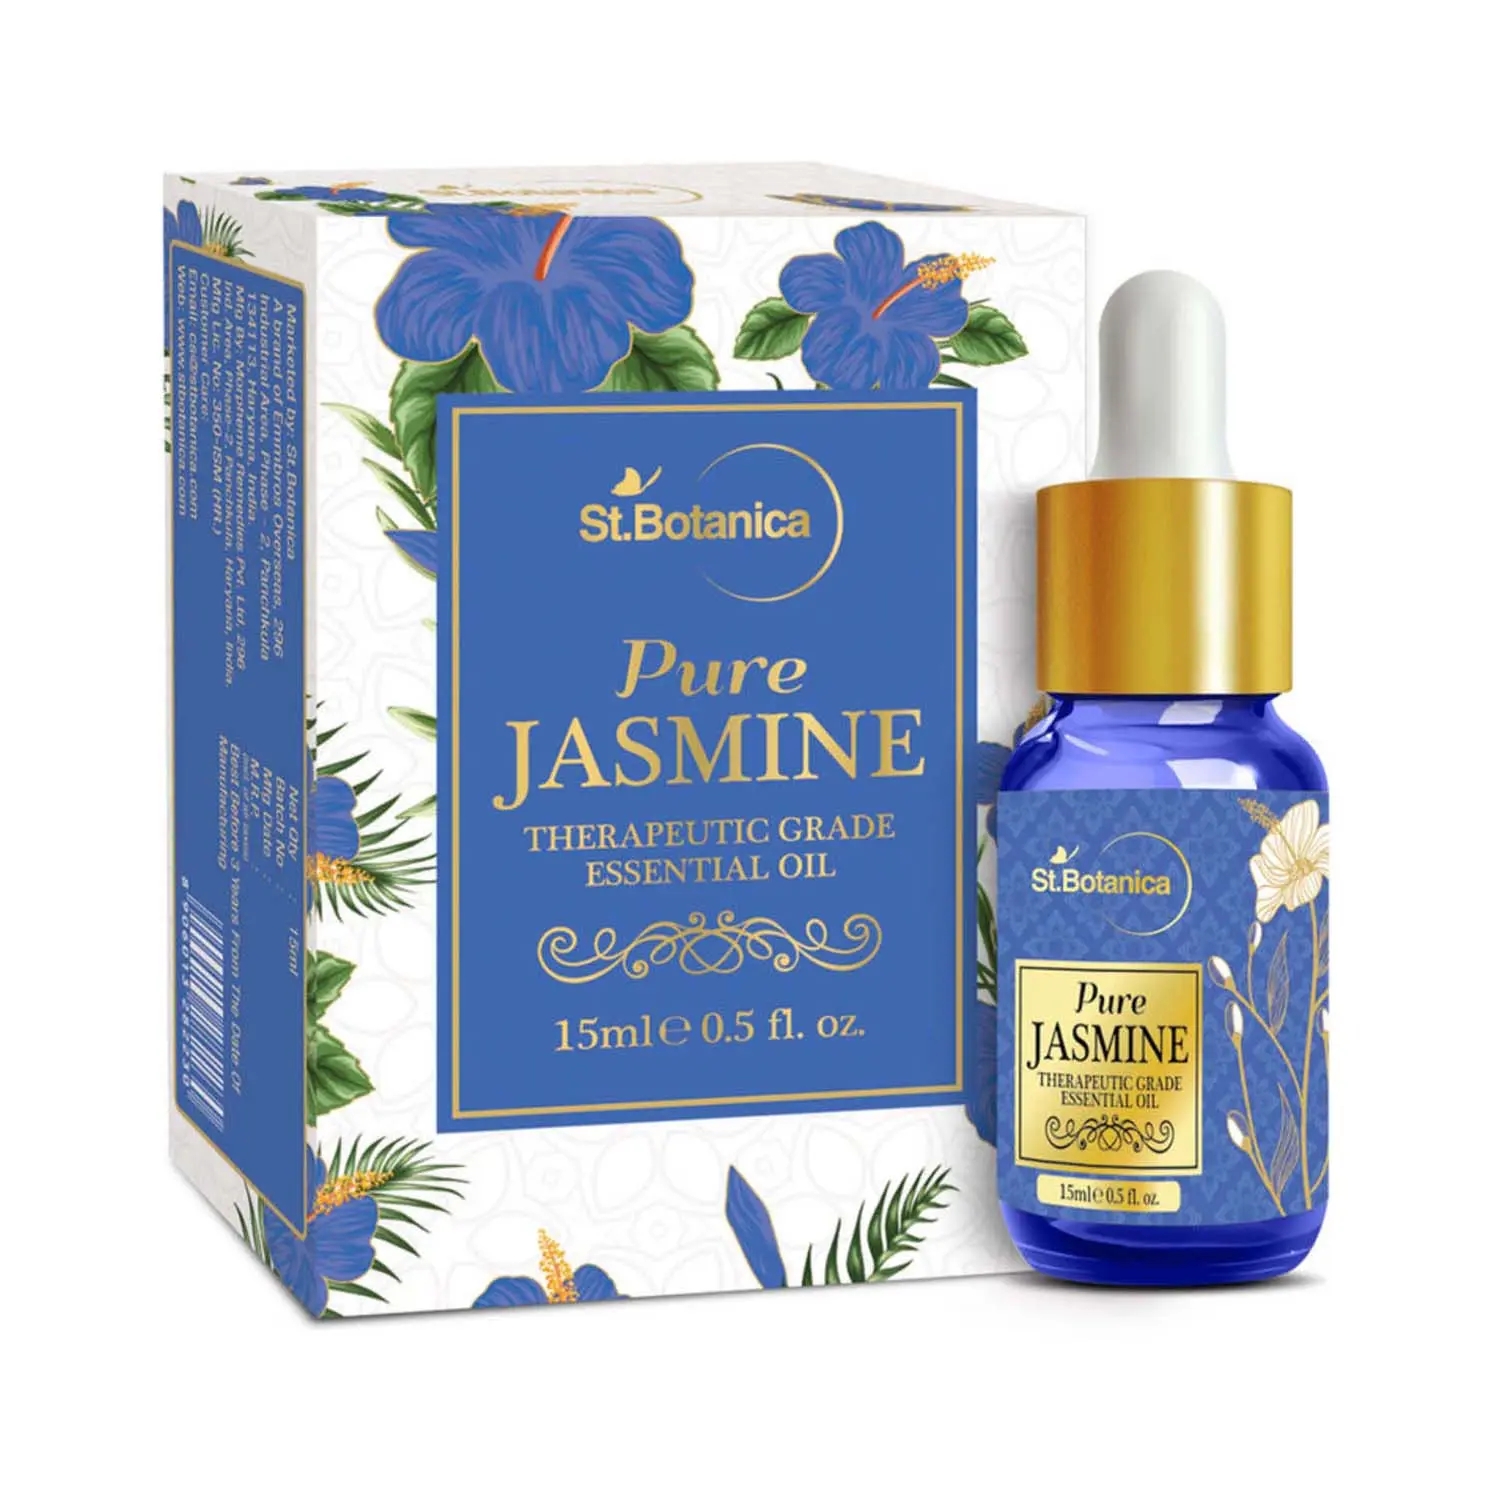 St.Botanica | St.Botanica Pure Jasmine Essential Oil (15ml)